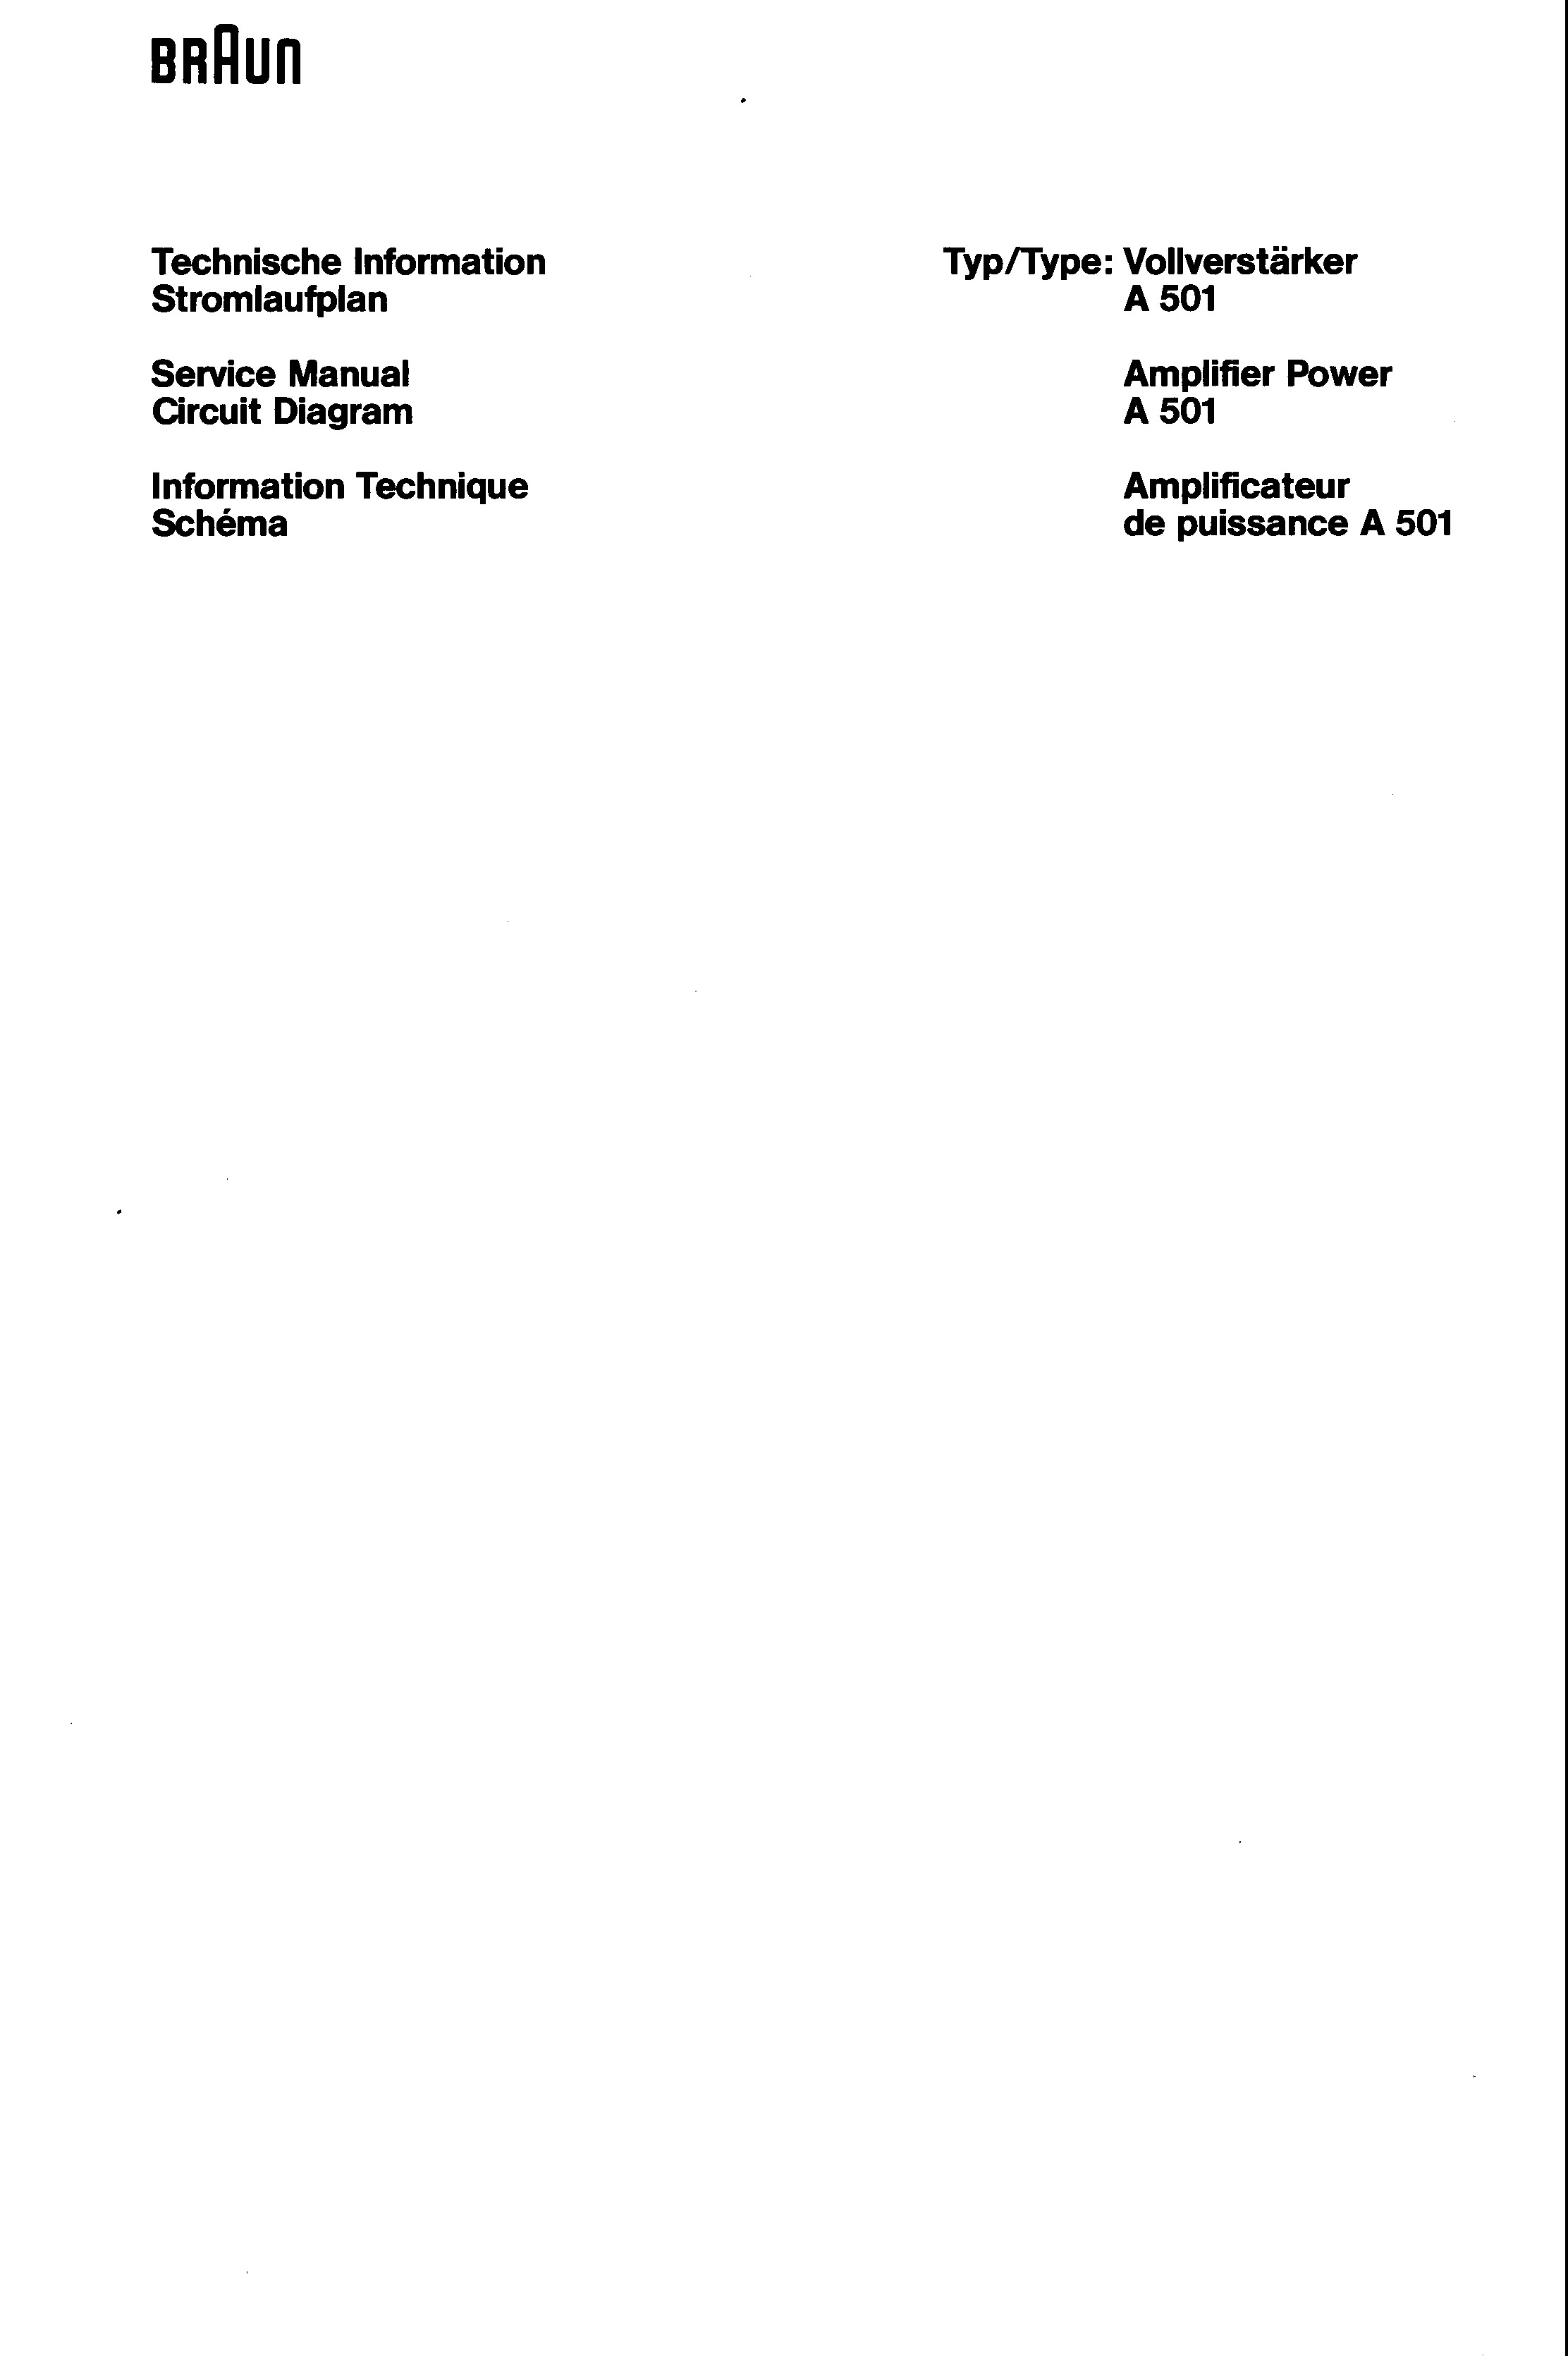 Braun A 501.pdf